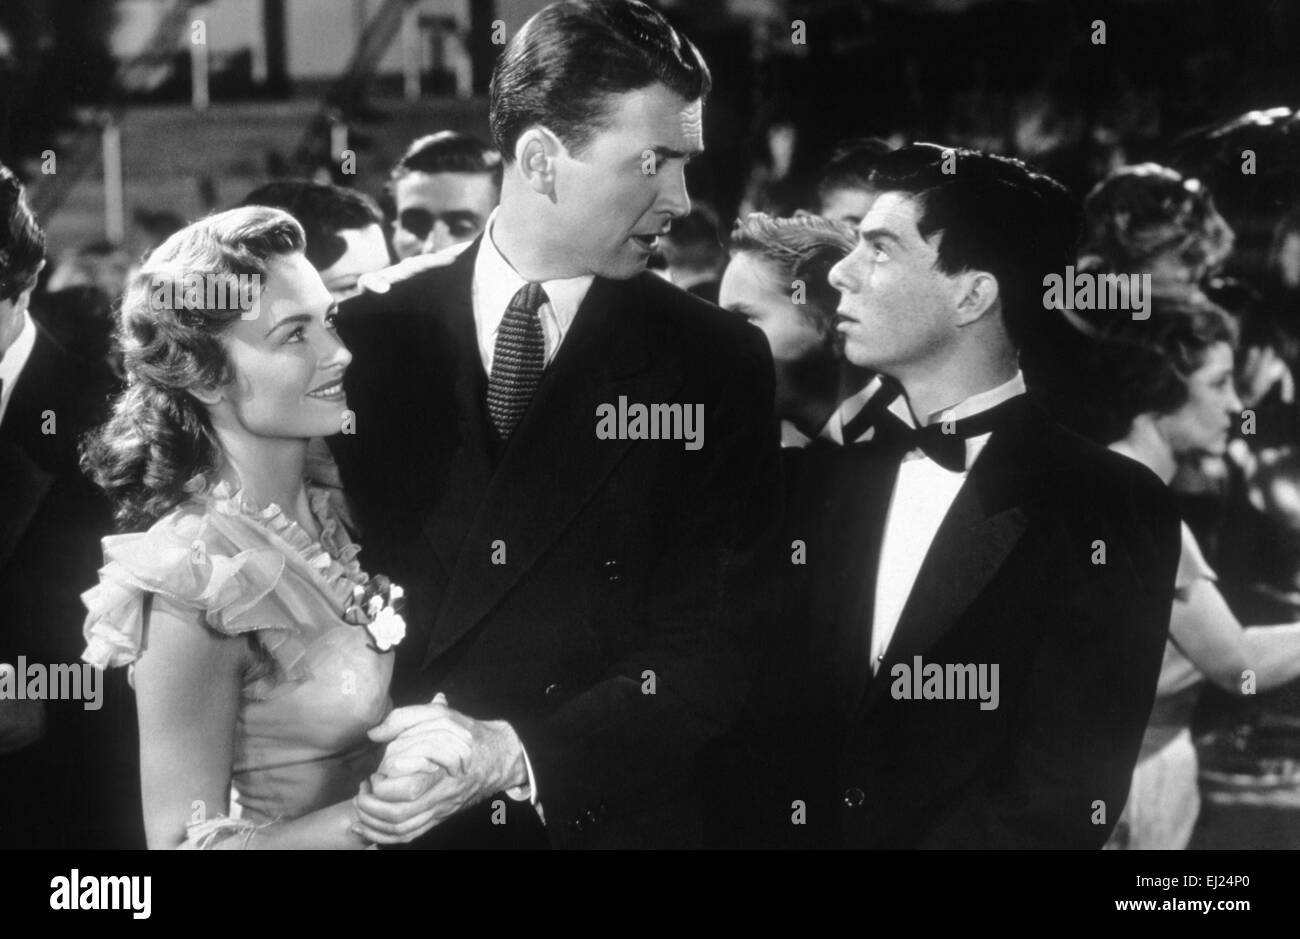 It's a Wonderful Life Year : 1946 USA Director : Frank Capra James Stewart, Donna Reed Stock Photo